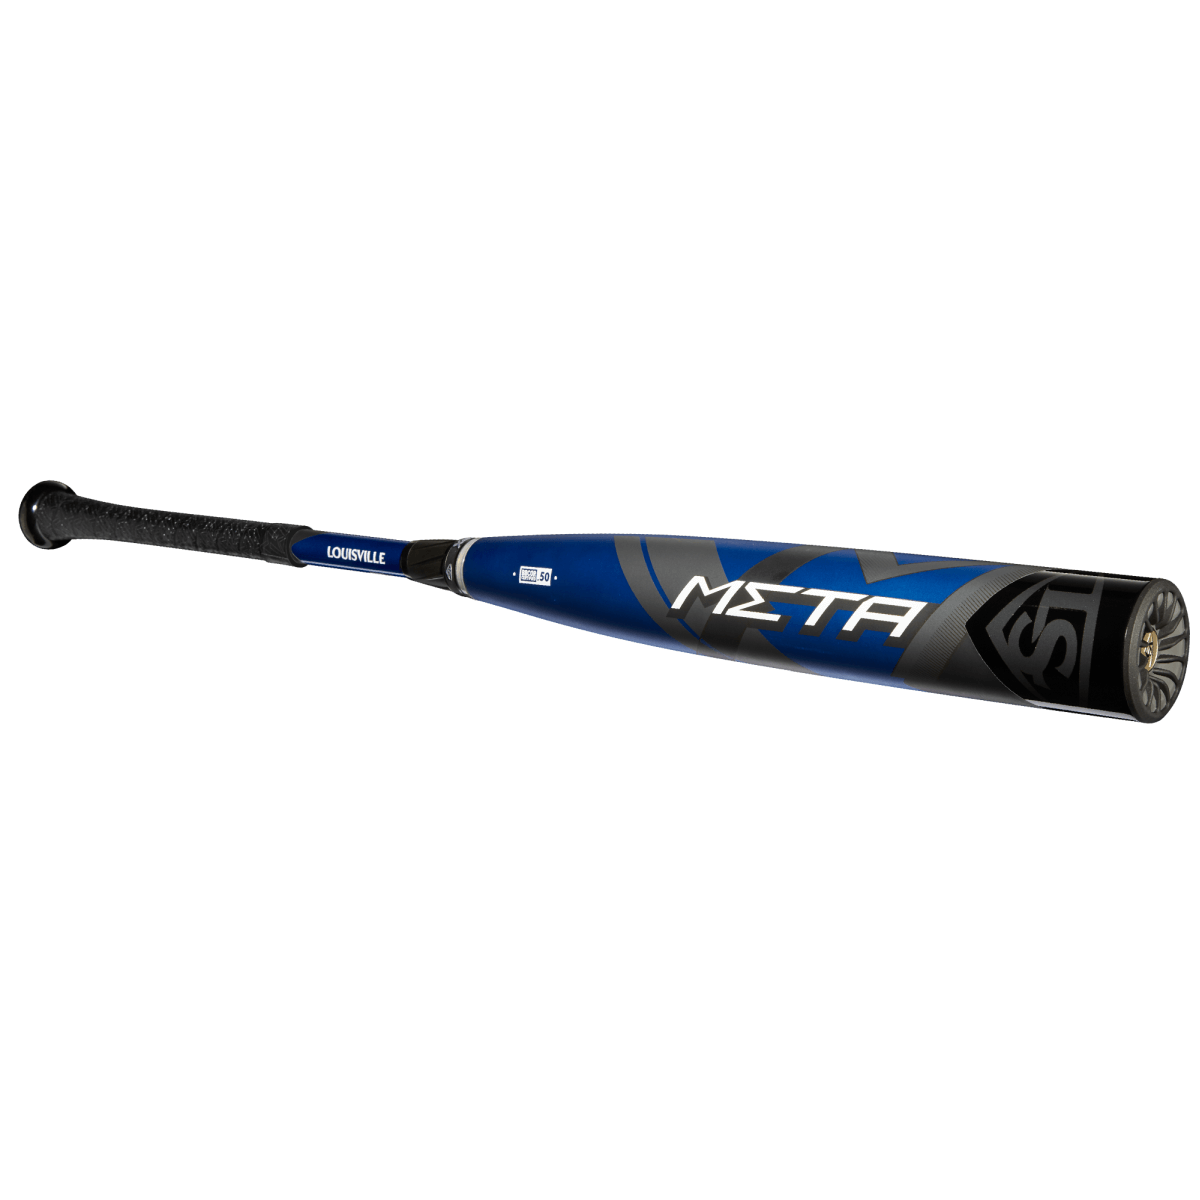 2020 Louisville Slugger Meta BBCOR Baseball Bat for Sale at Bats Plus